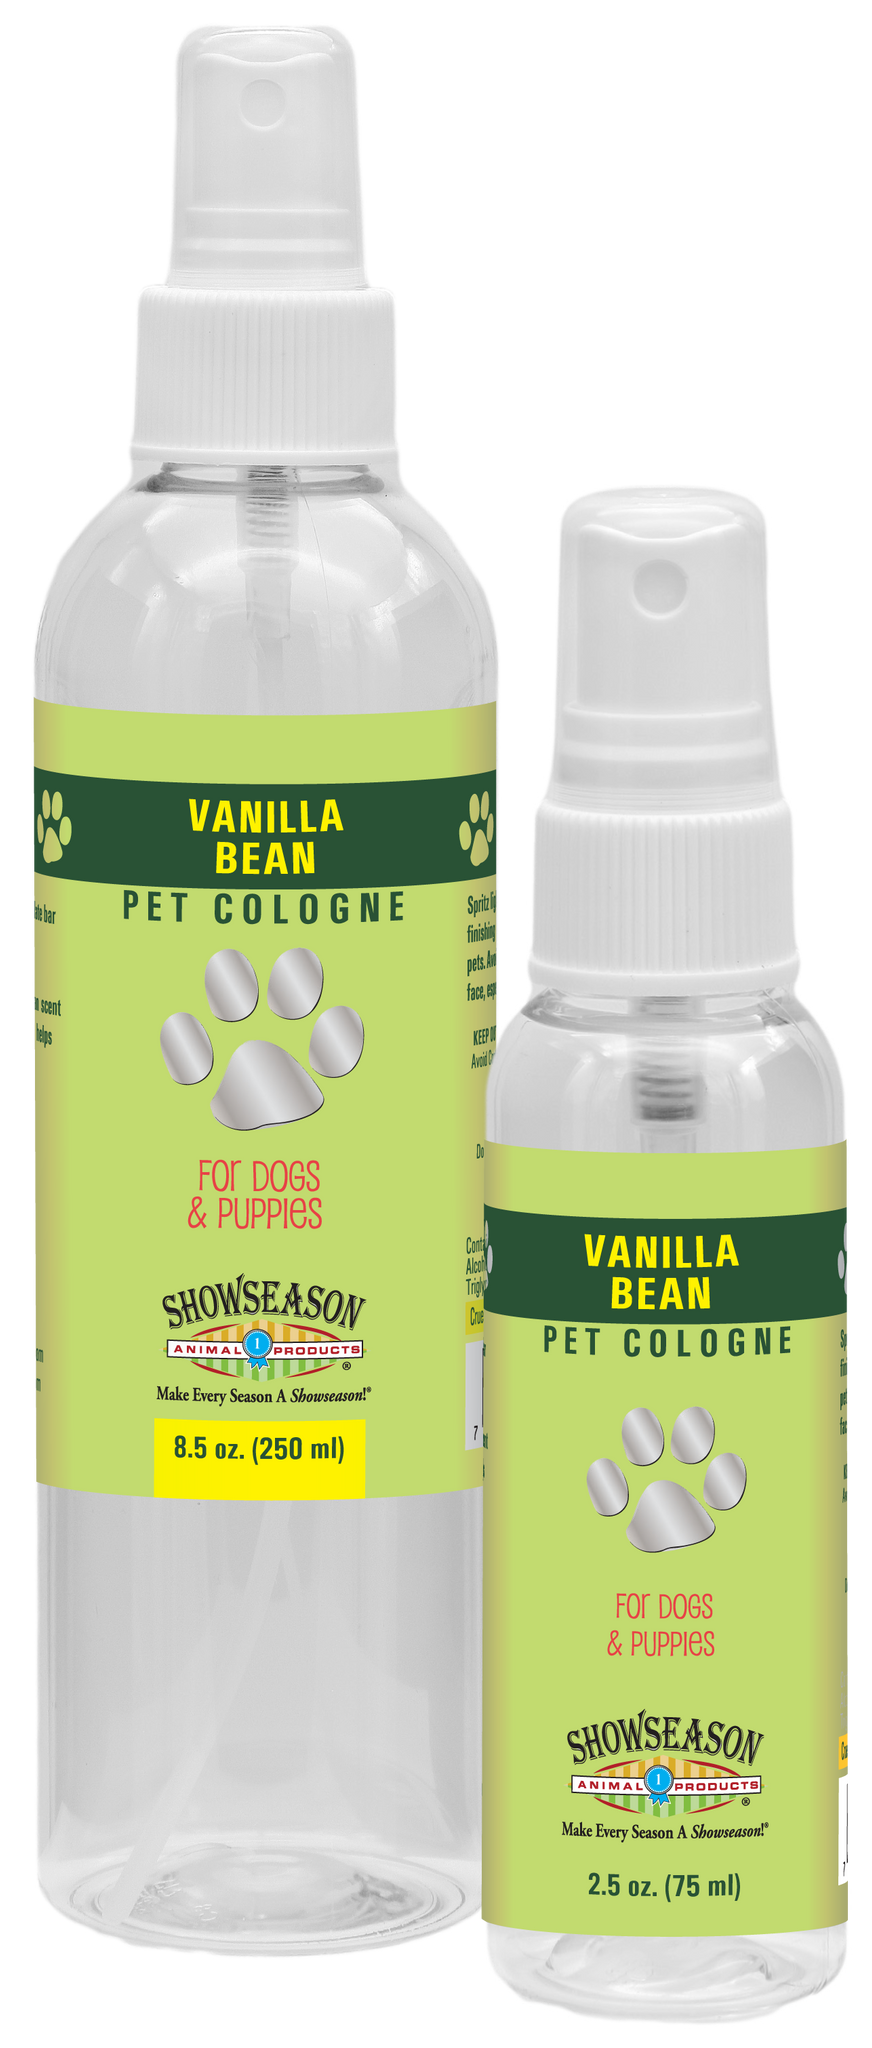 Vanilla Bean Pet Cologne | Showseason®